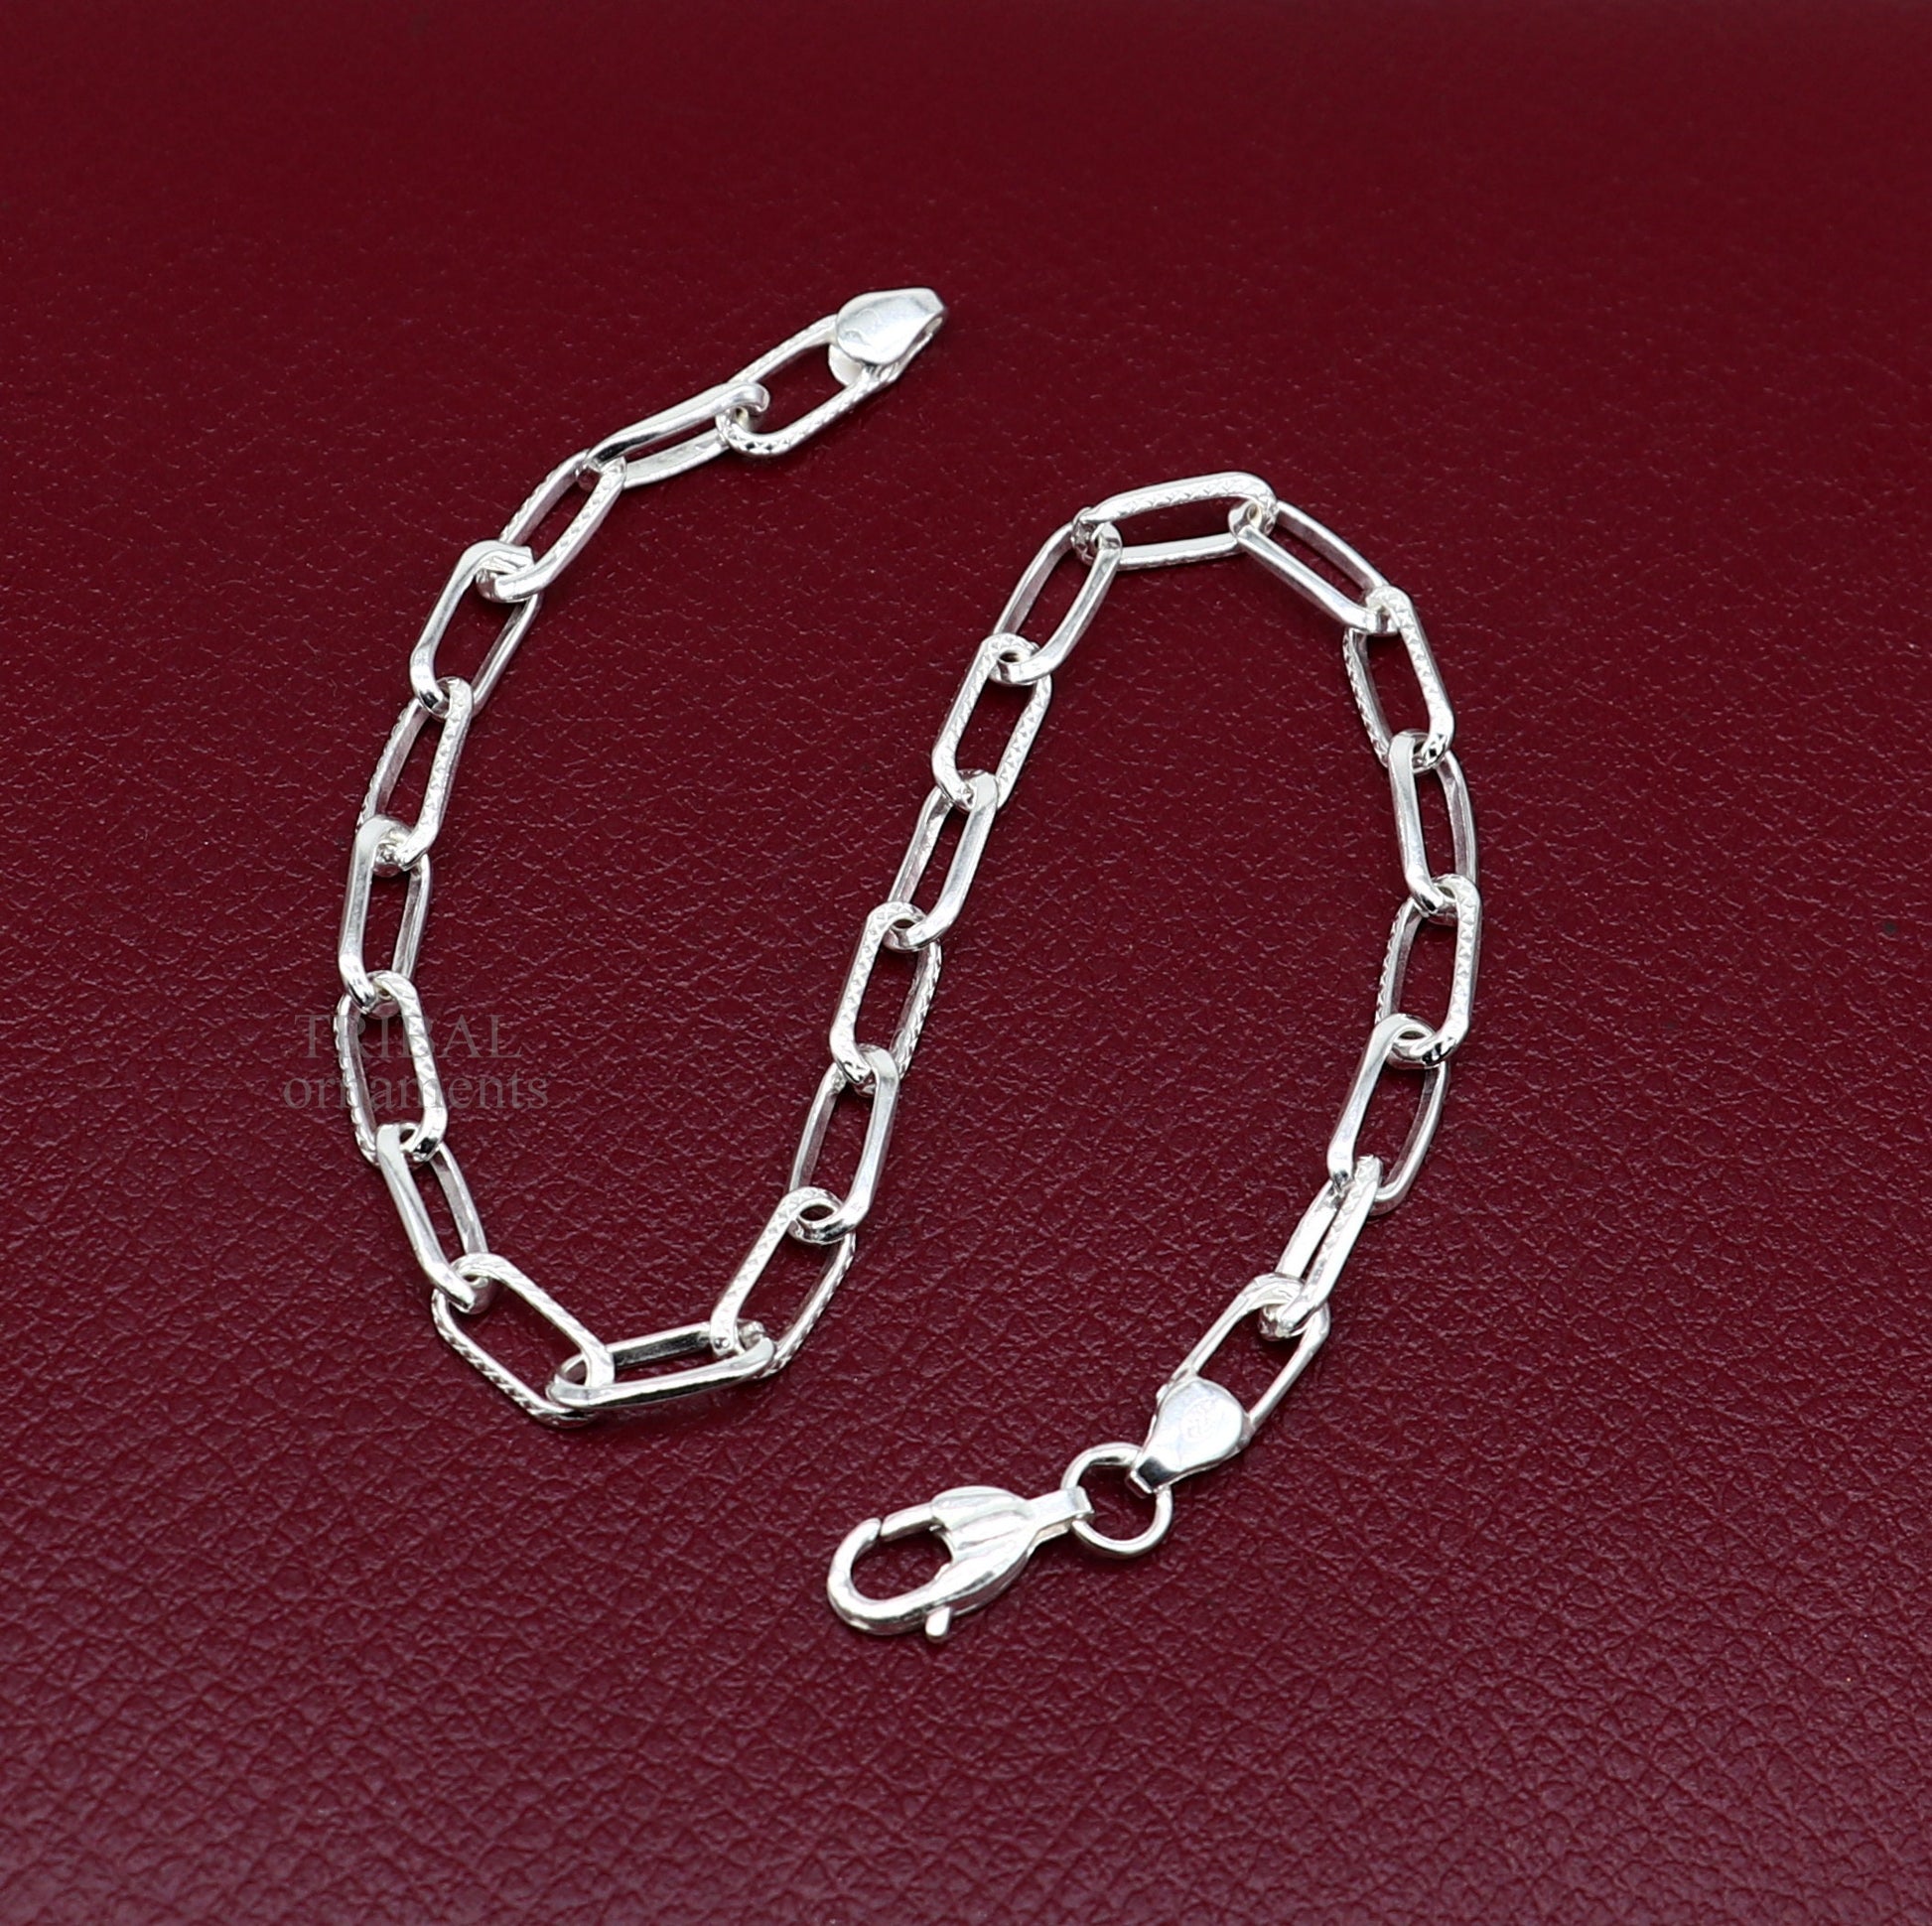 Solid 4mm 925 sterling silver handmade Bracelet, Dainty Silver Bracelet, Chain Bracelet, Minimal Jewelry, Gift For unisex couple nsbr508 - TRIBAL ORNAMENTS